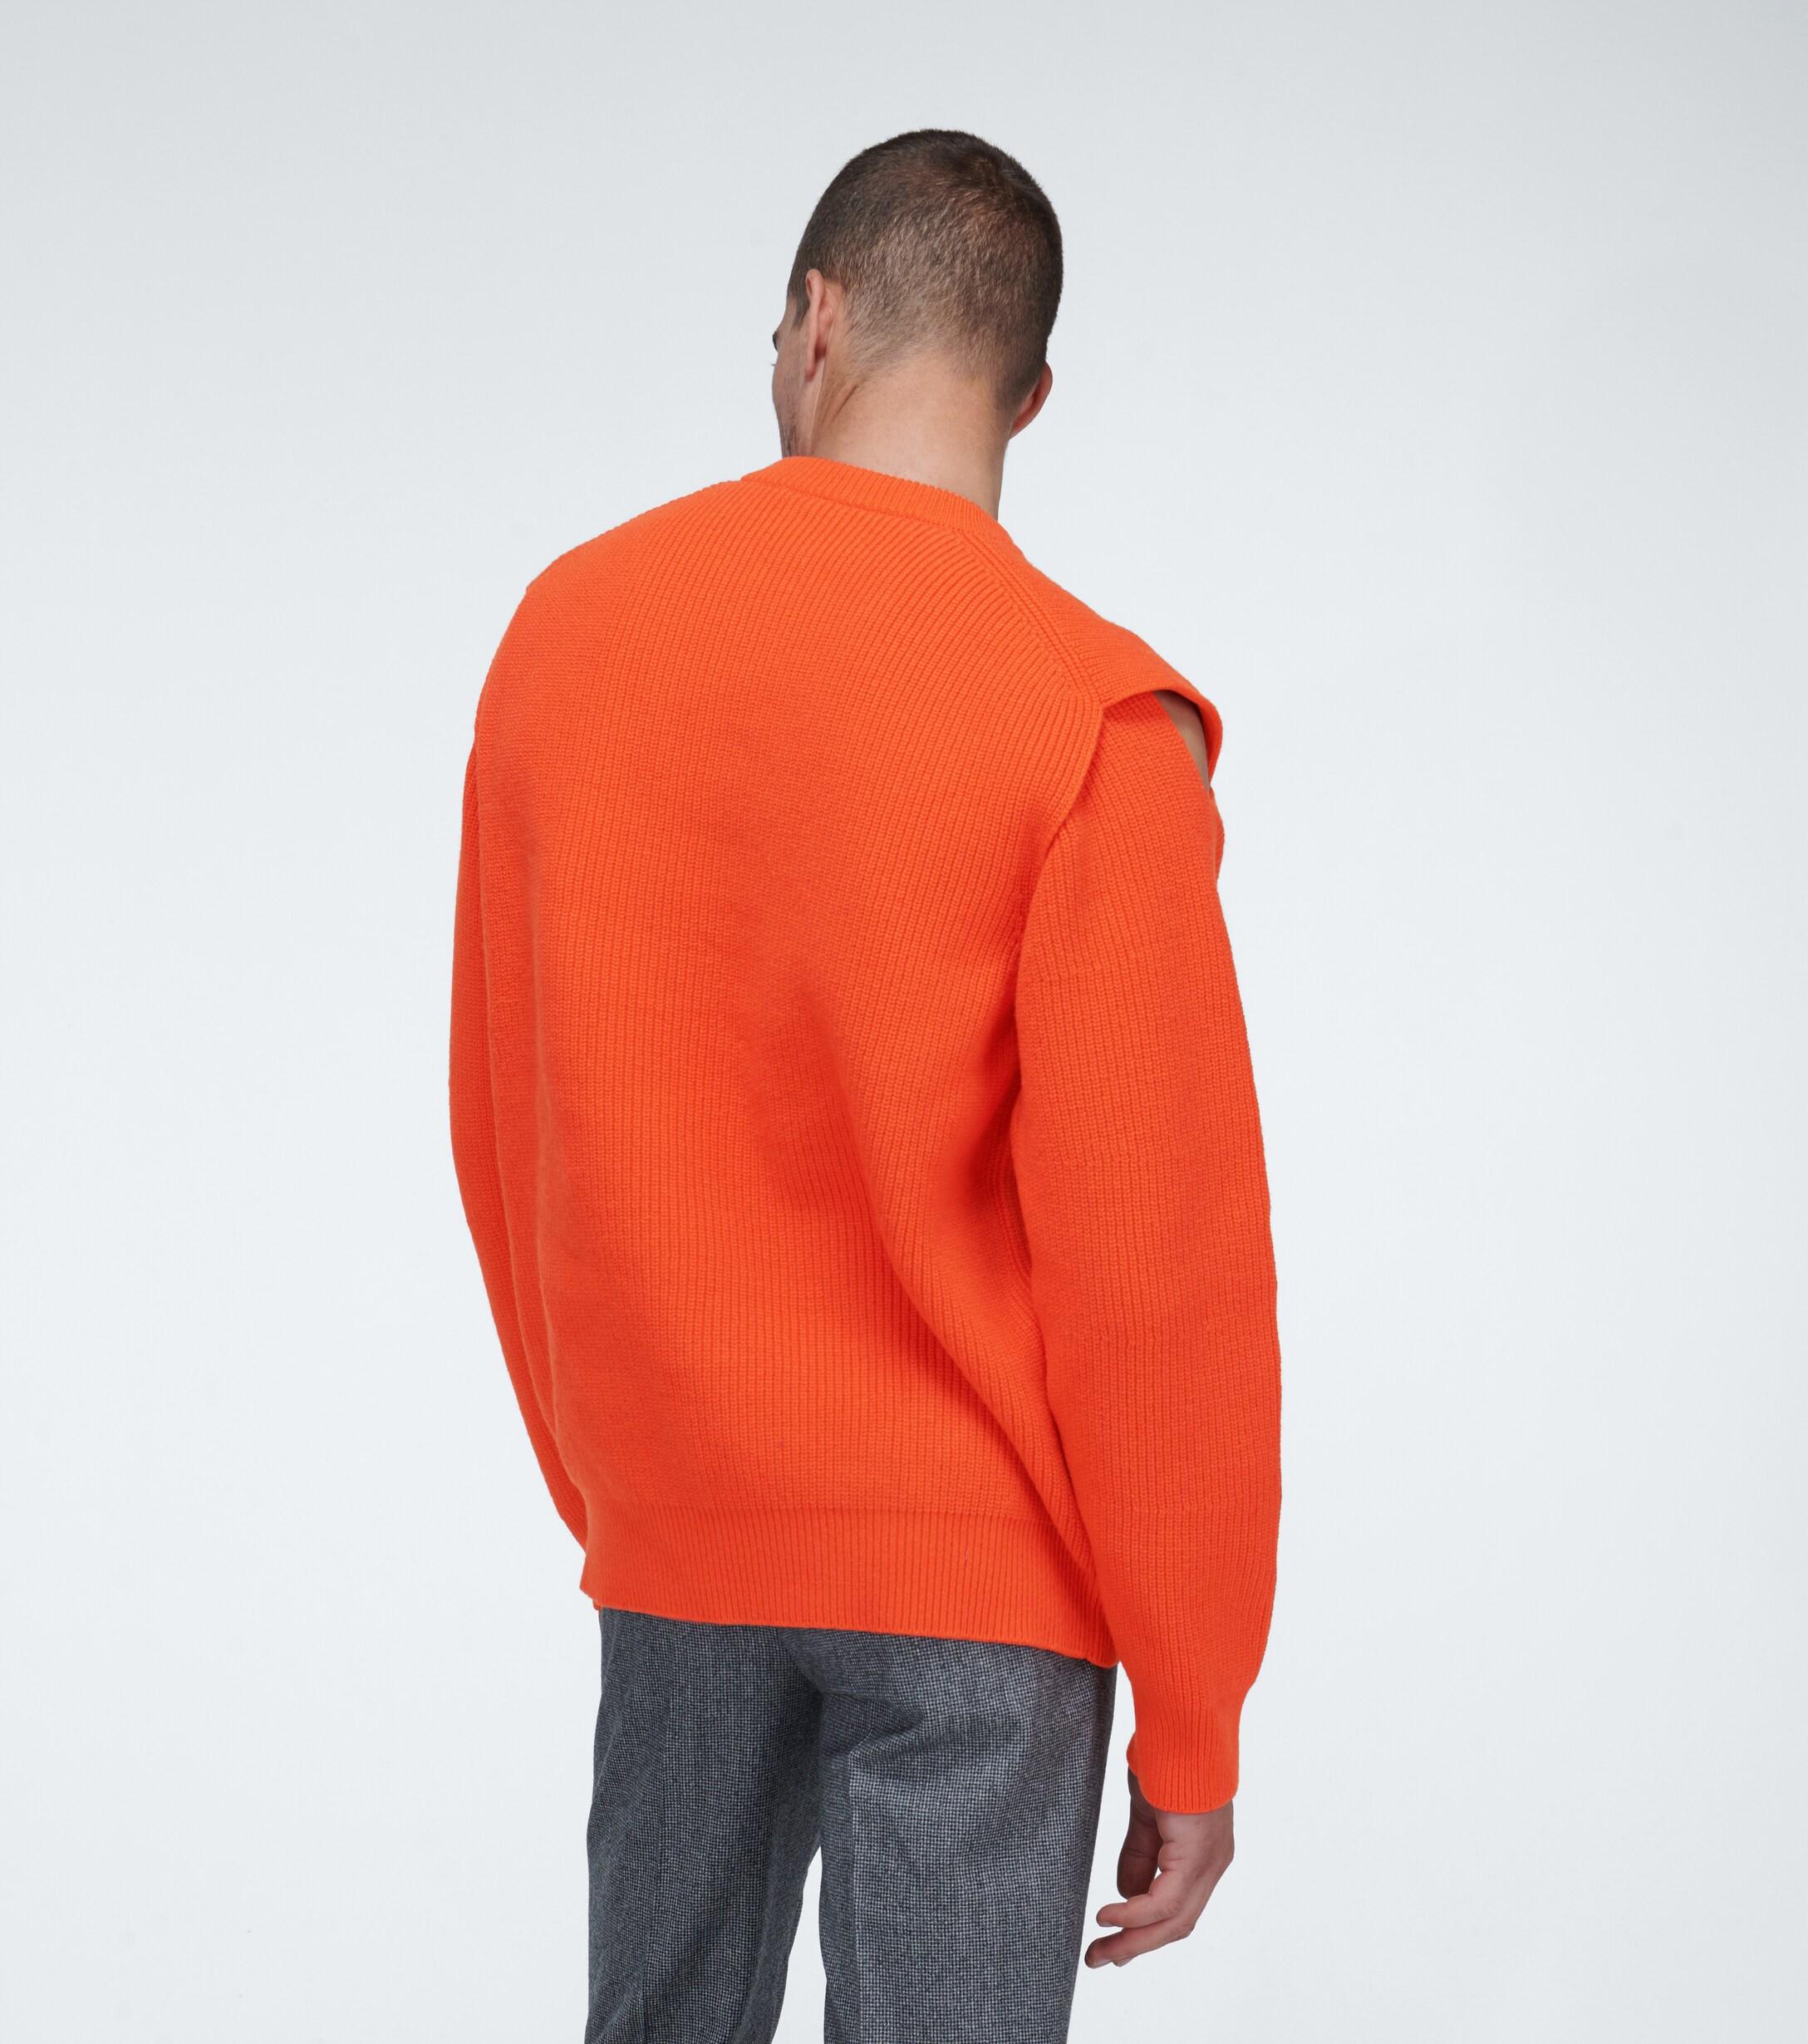 Bottega Veneta Deconstructed Knit Cashmere Sweater in Orange for Men - Lyst